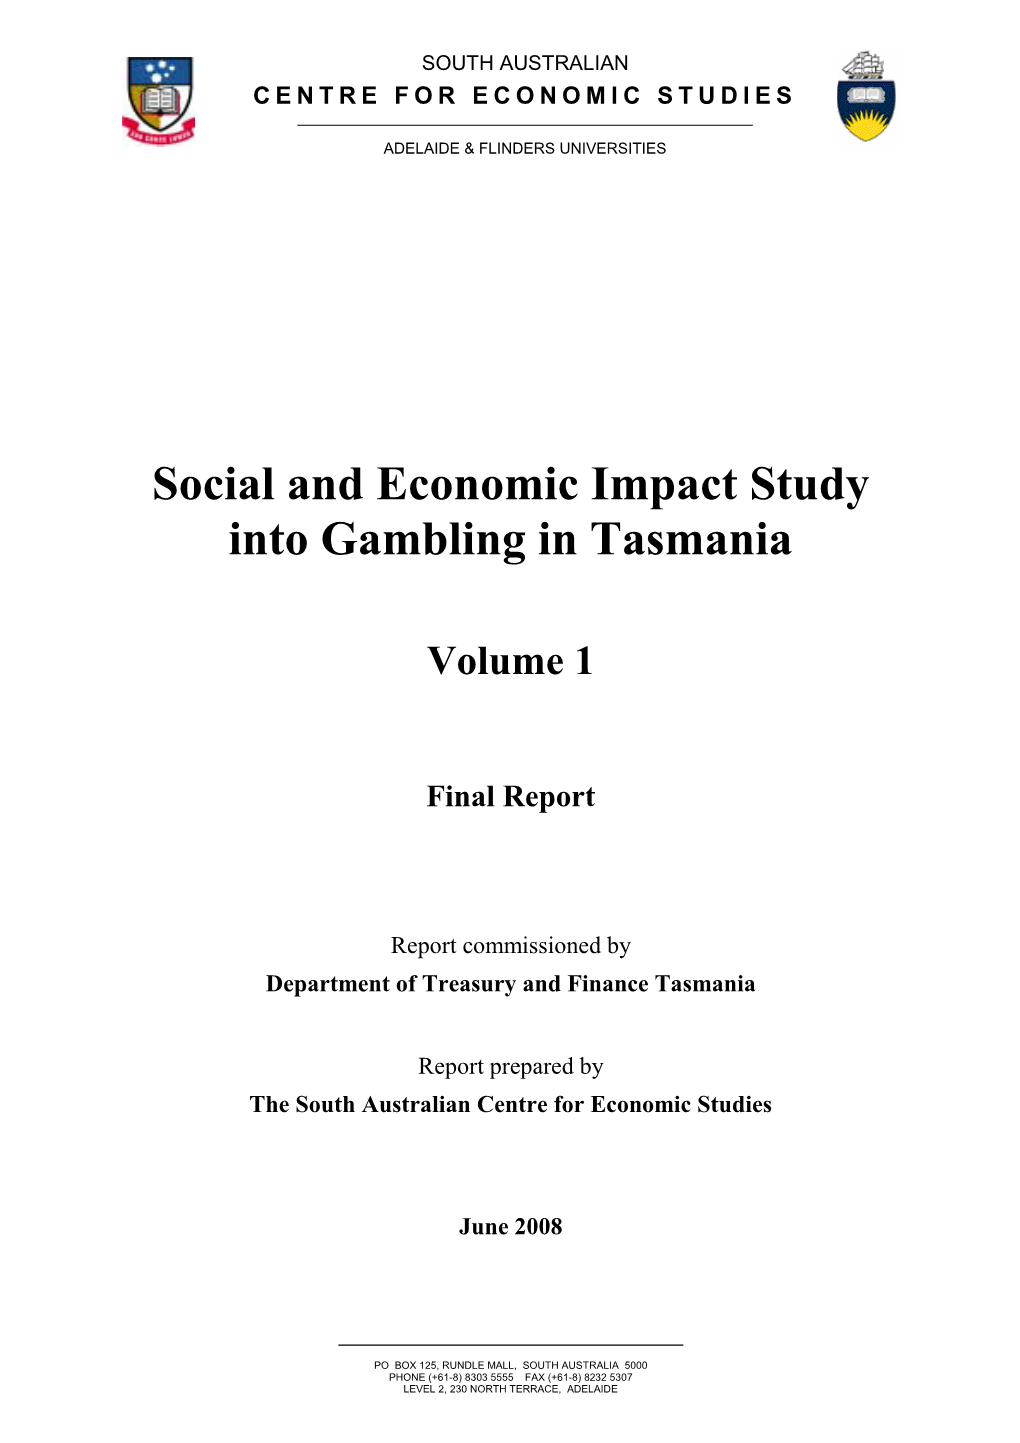 Social and Economic Impact Study Into Gambling in Tasmania